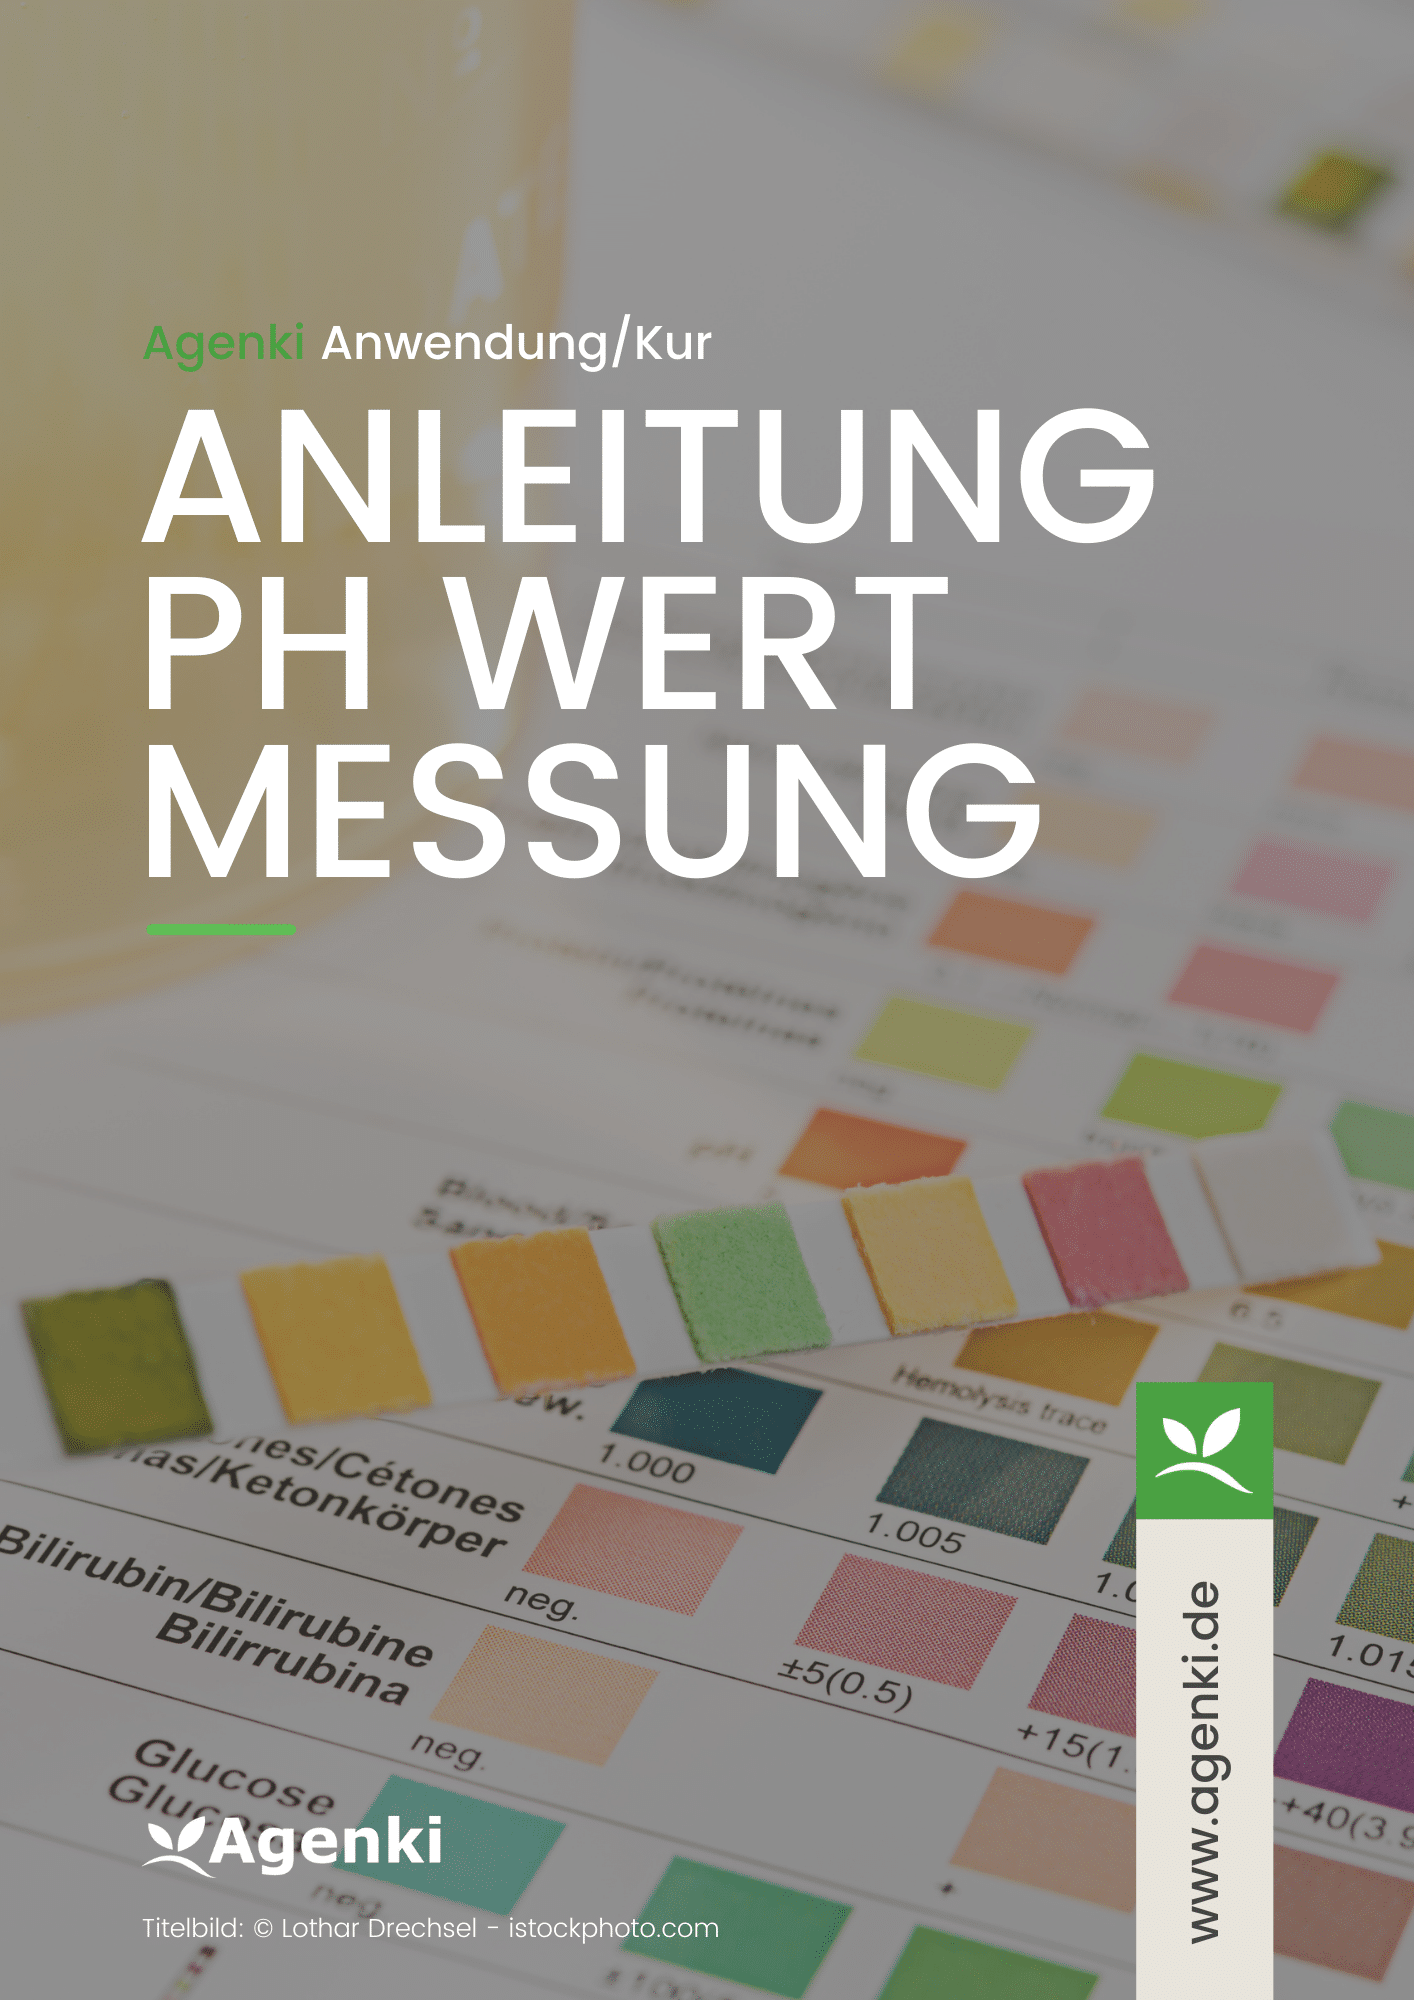 Anleitung pH Wert Messung - Agenki